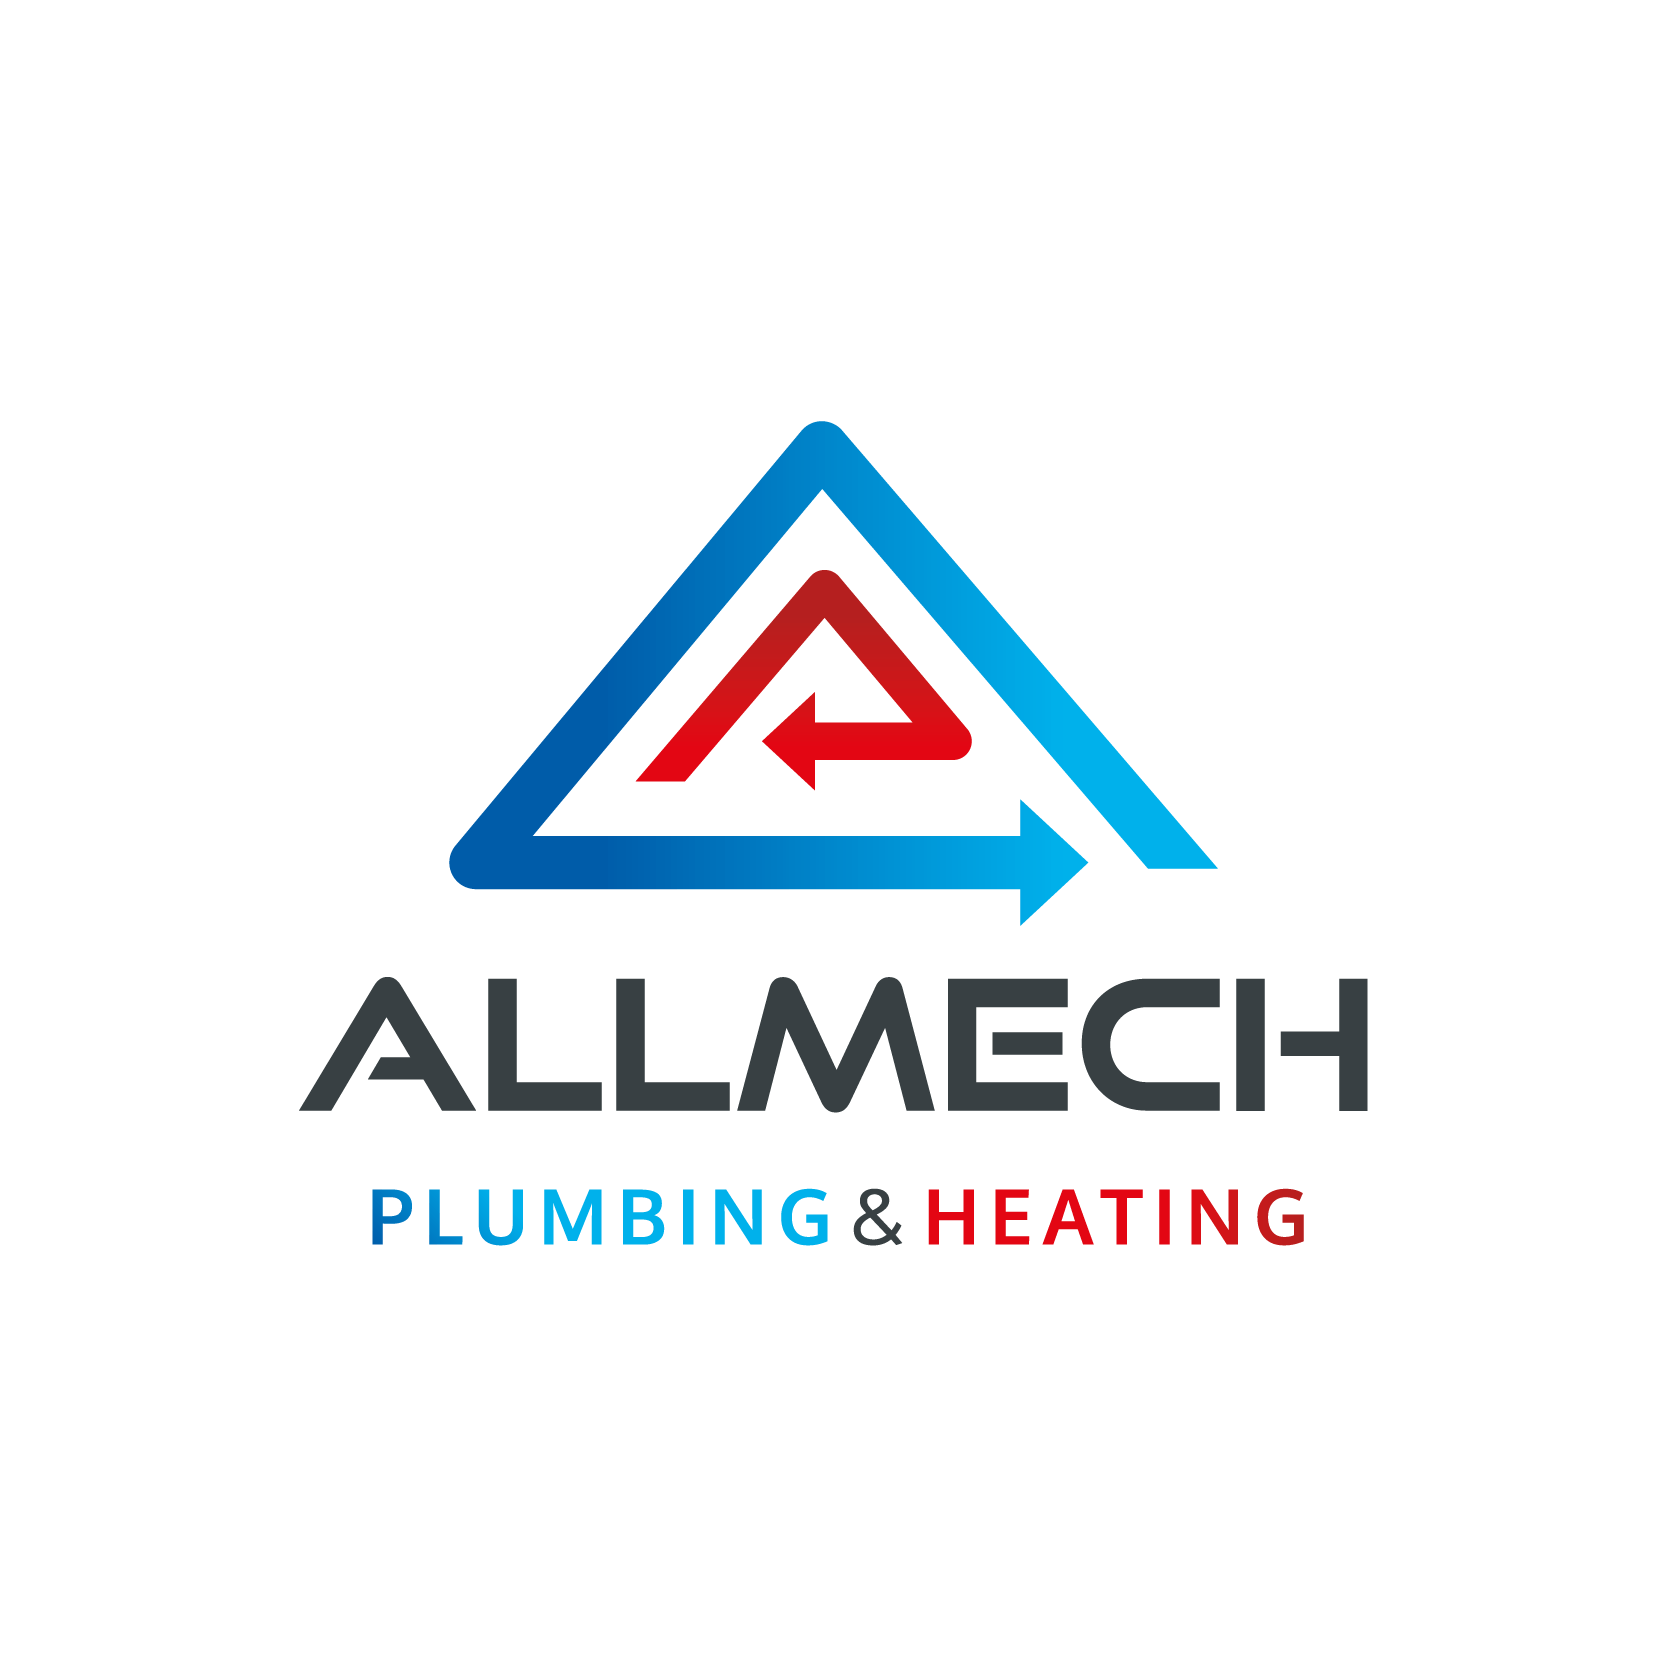 Logo Design for Plumbing & Heating Business